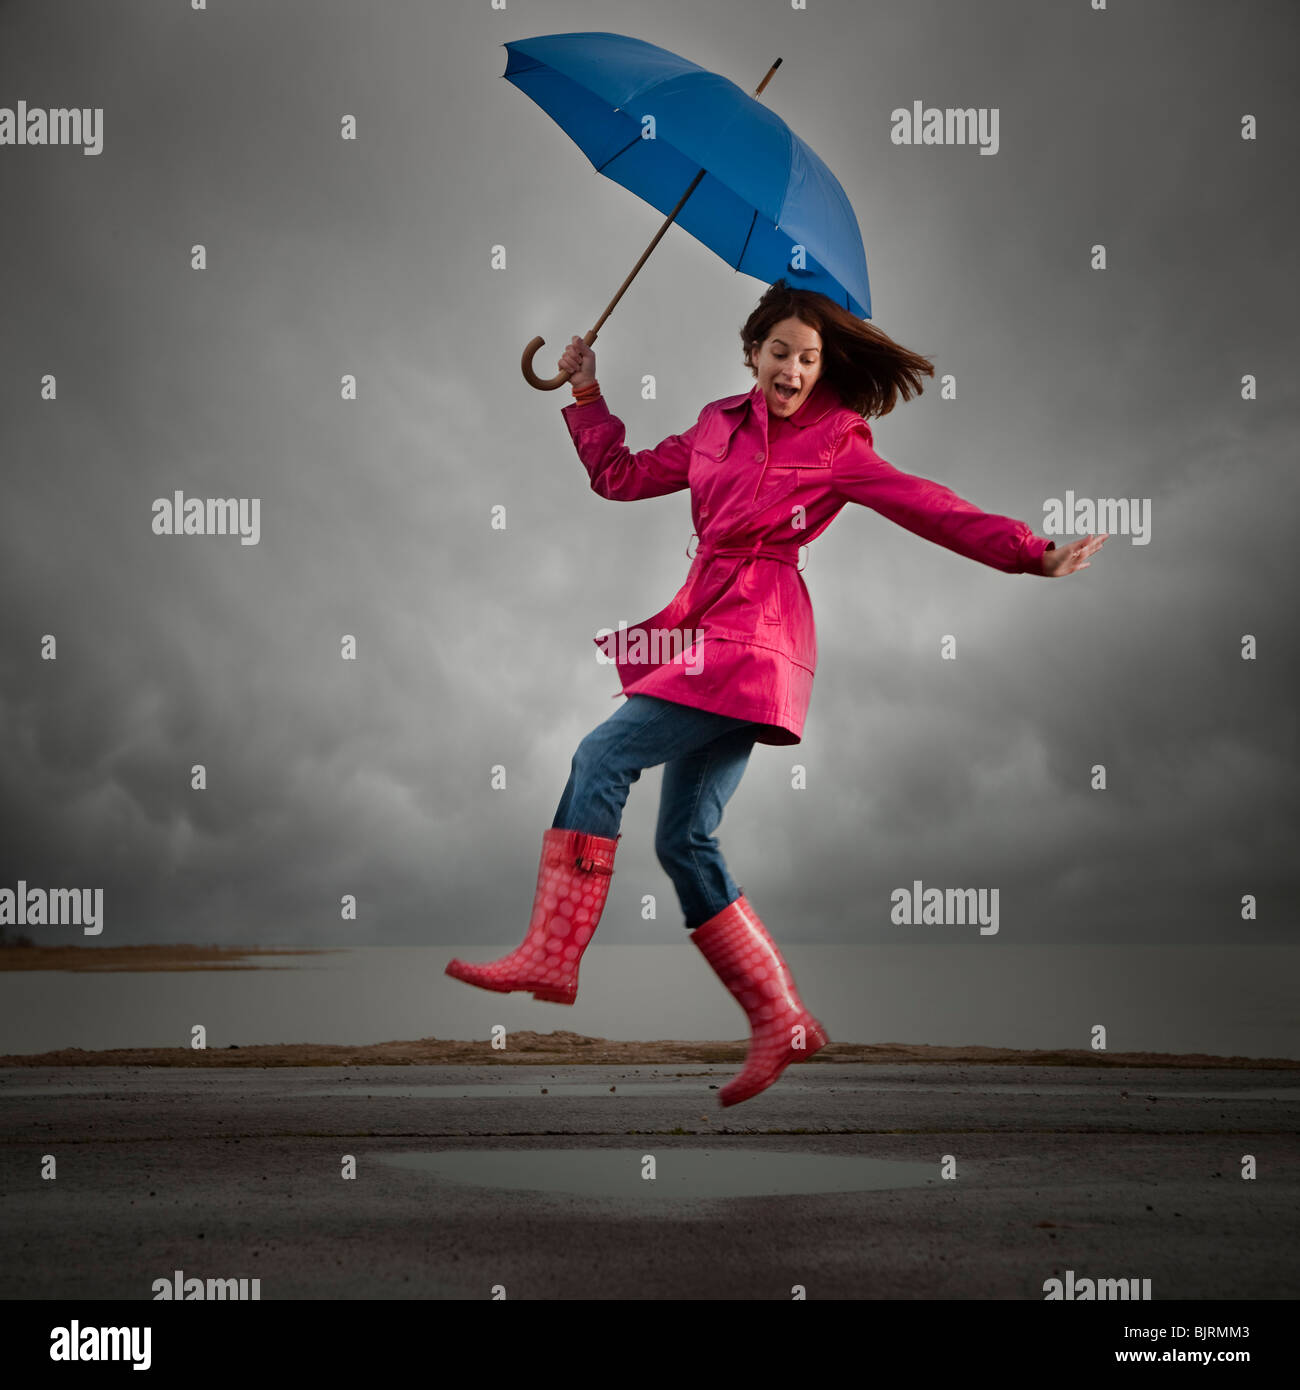 USA, Utah, Orem, woman with umbrella jumping under overcast sky Stock Photo